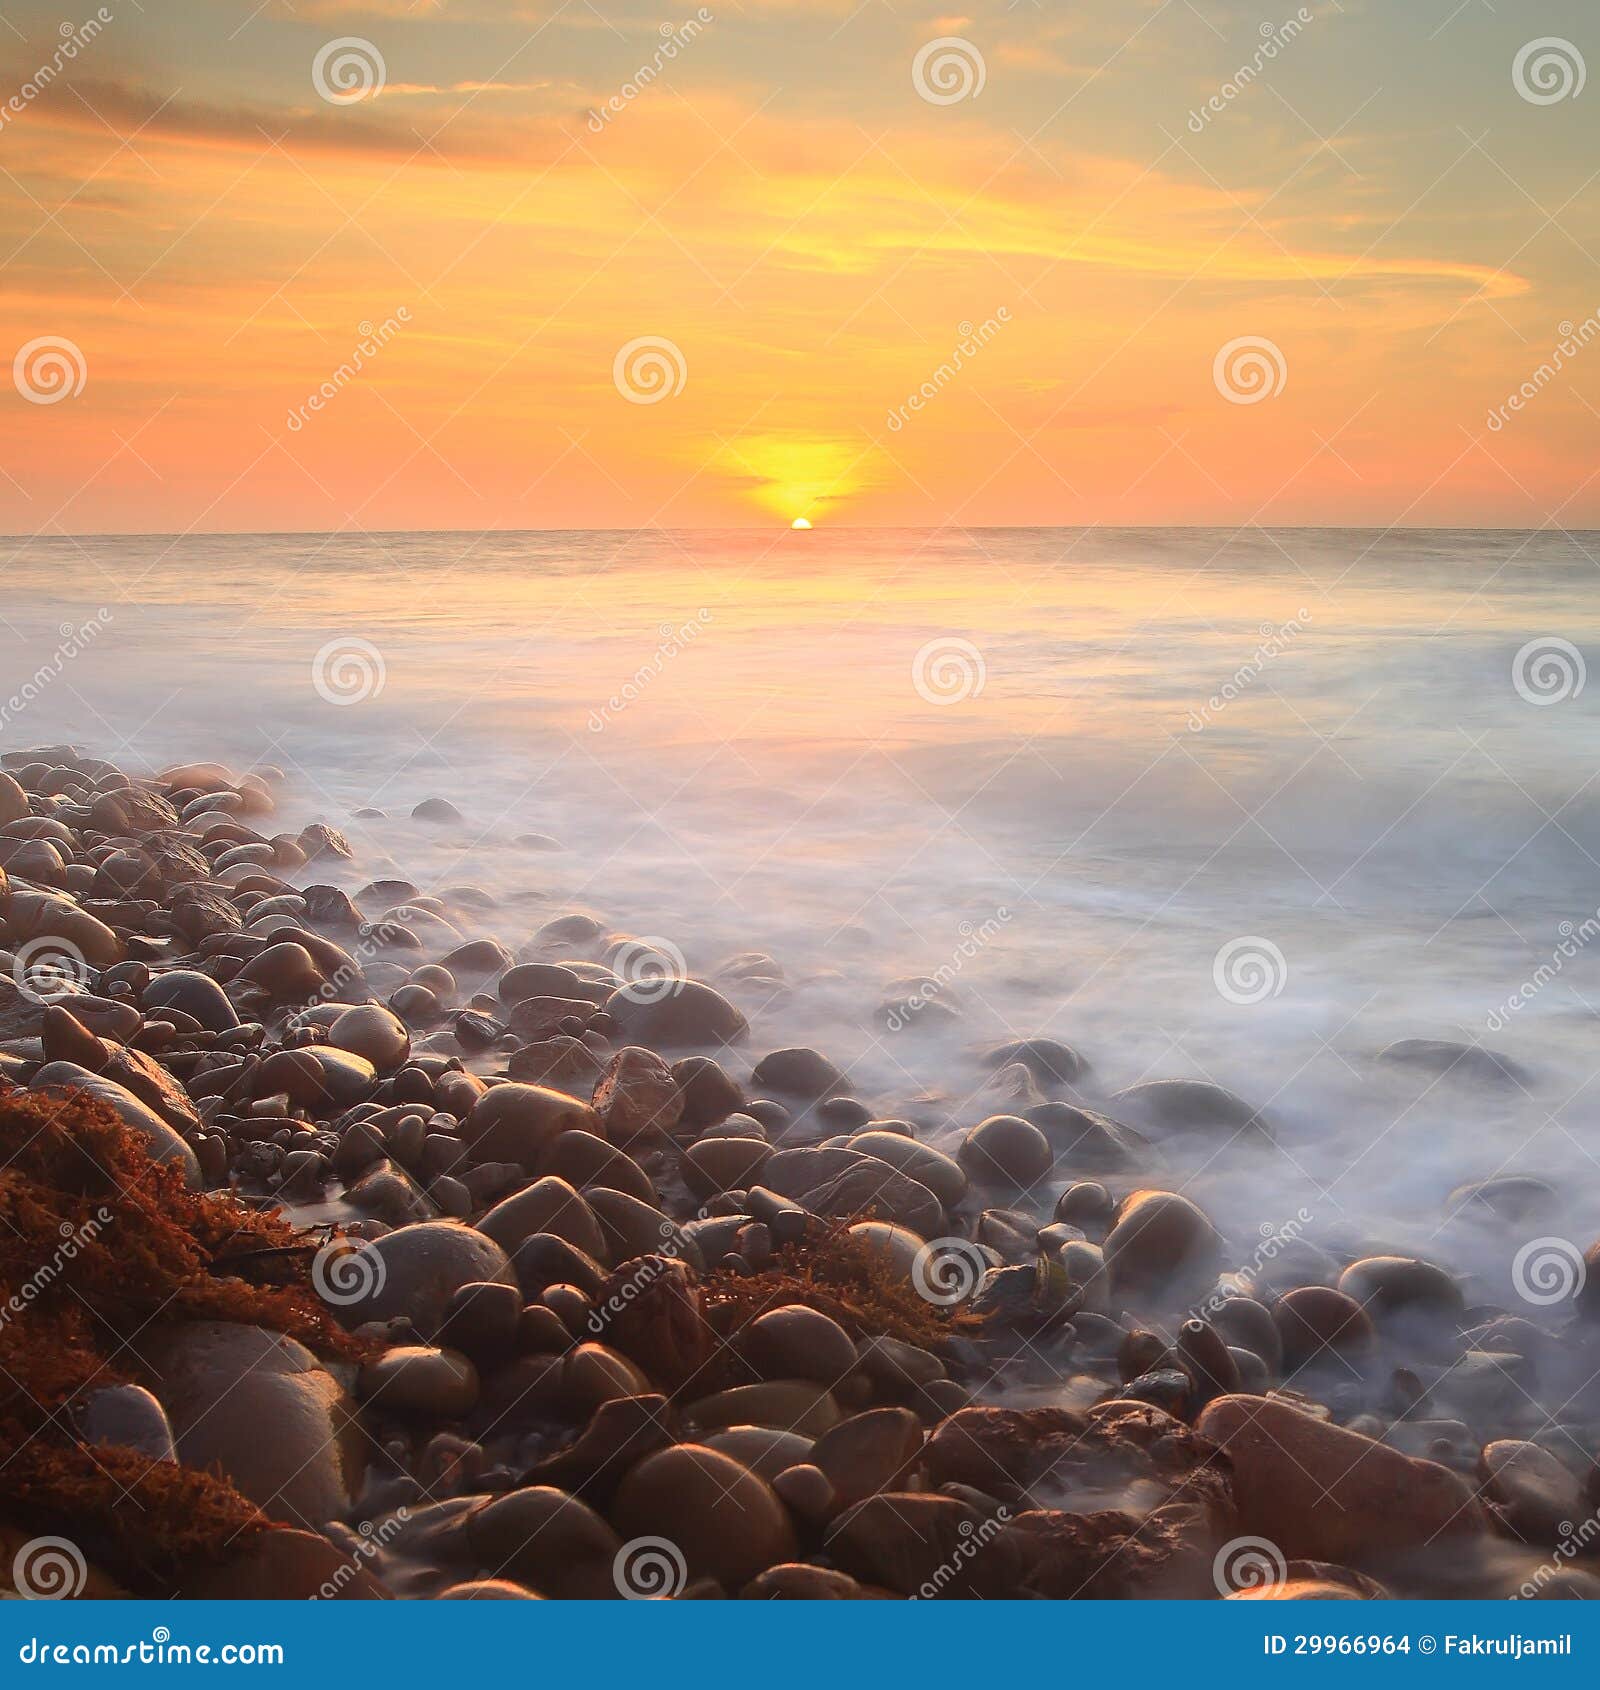 cobble stones sunset